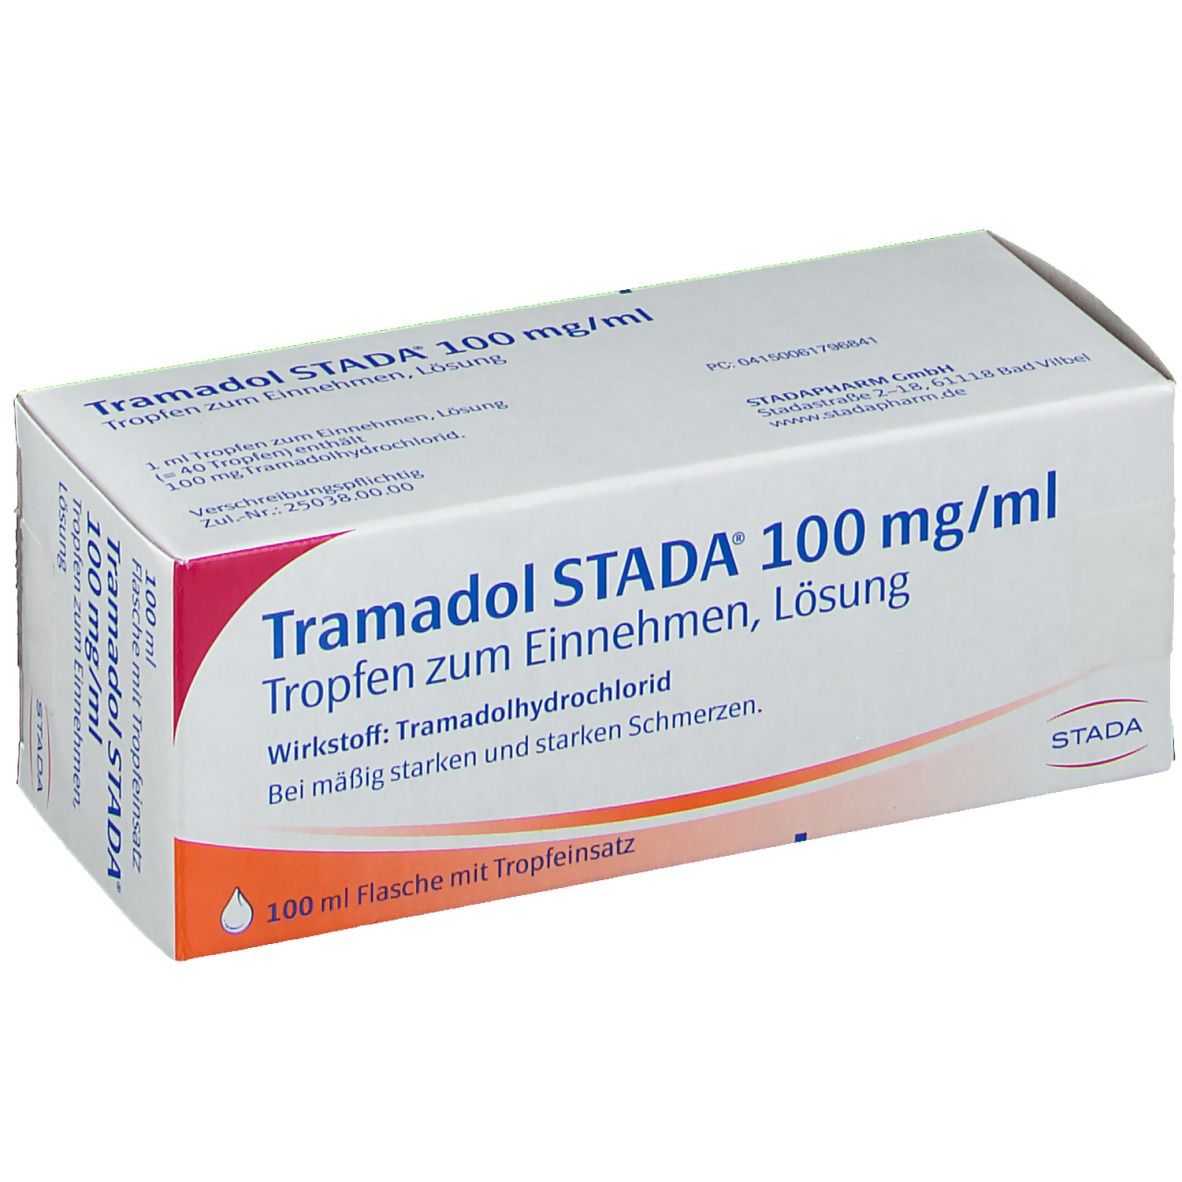 Tramadol STADA® 100 mg/ml Tropfen